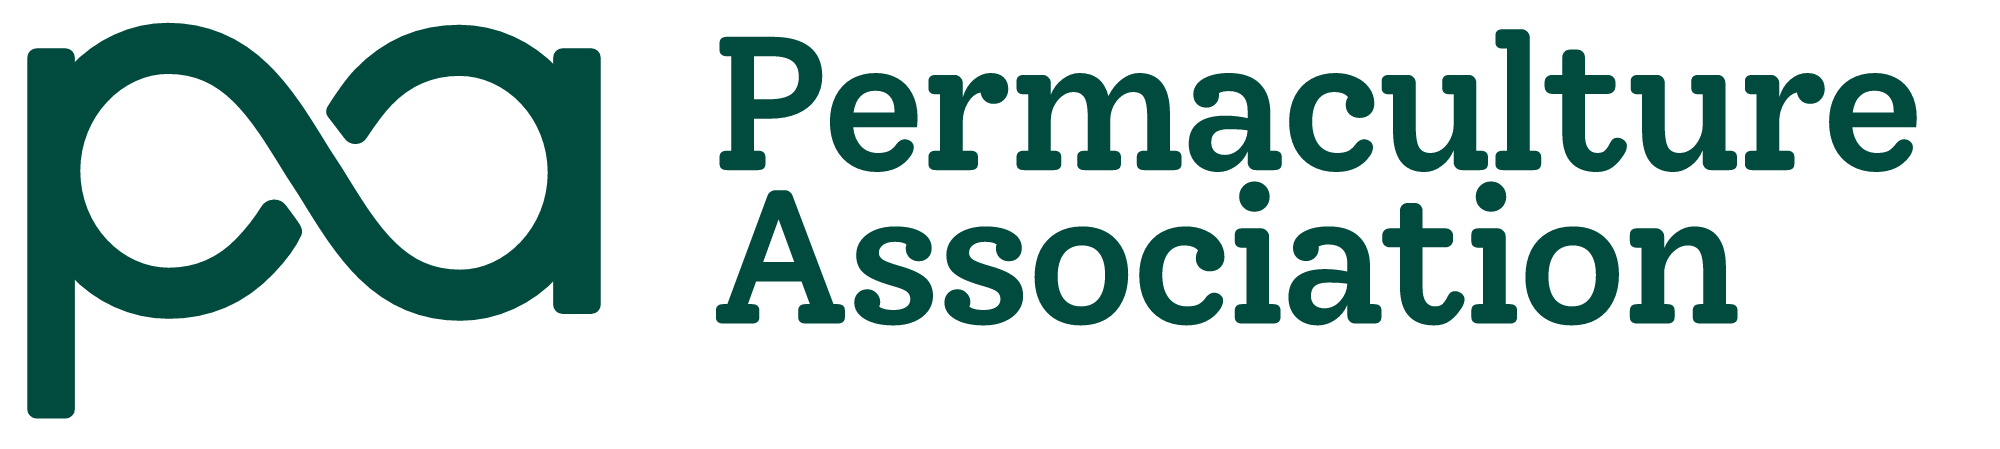 Permaculture association logo